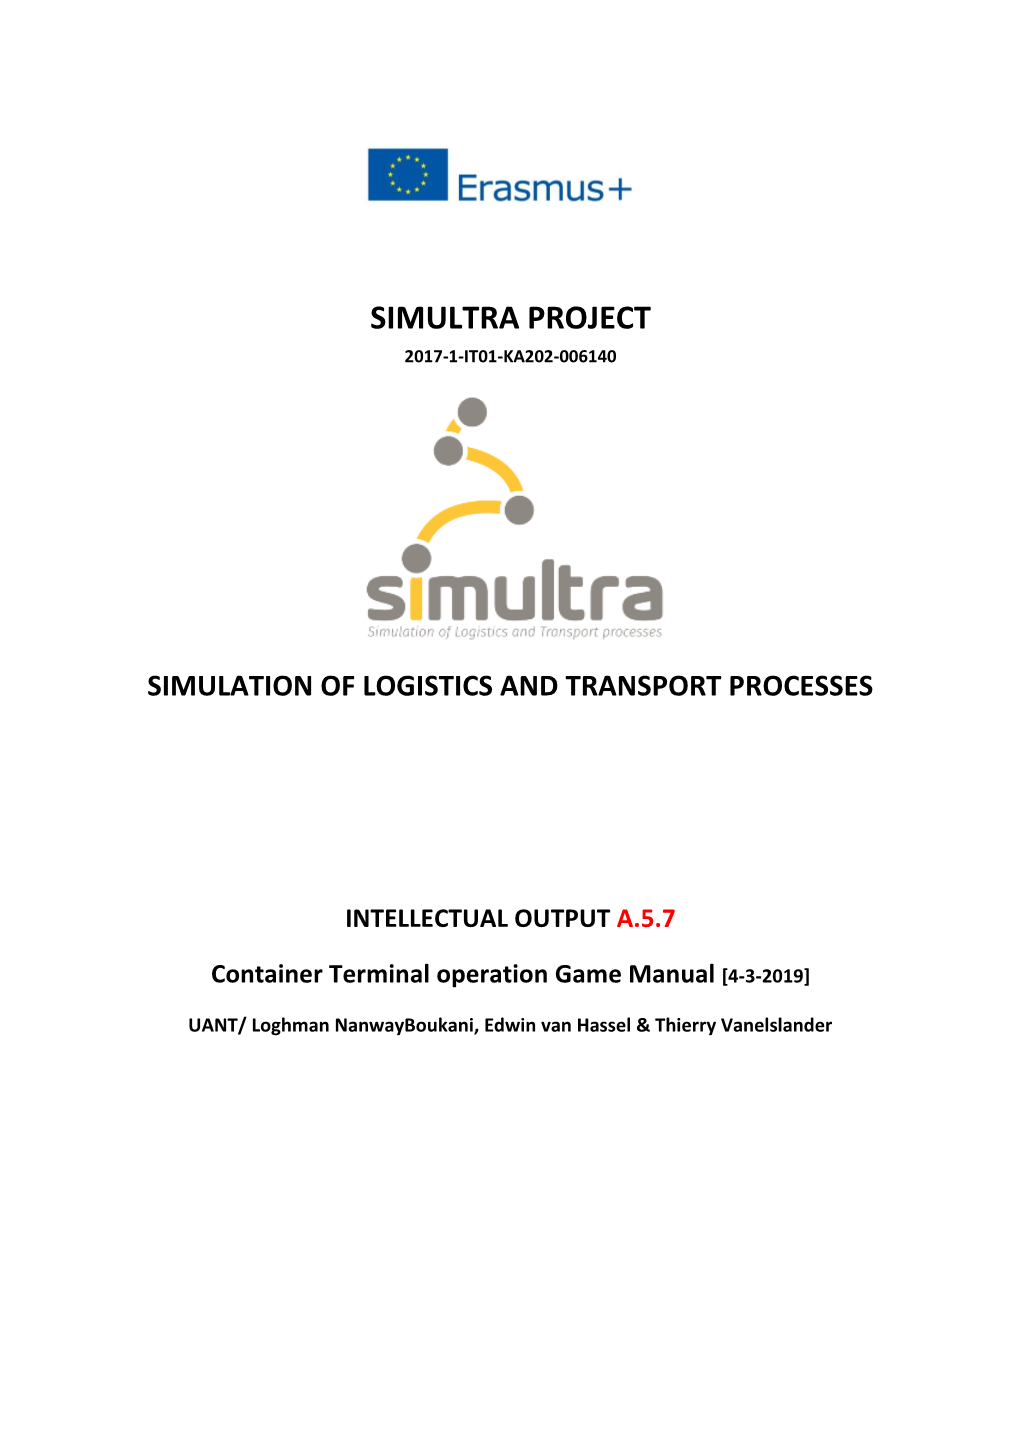 Simulation of Logistics and Transport Processes